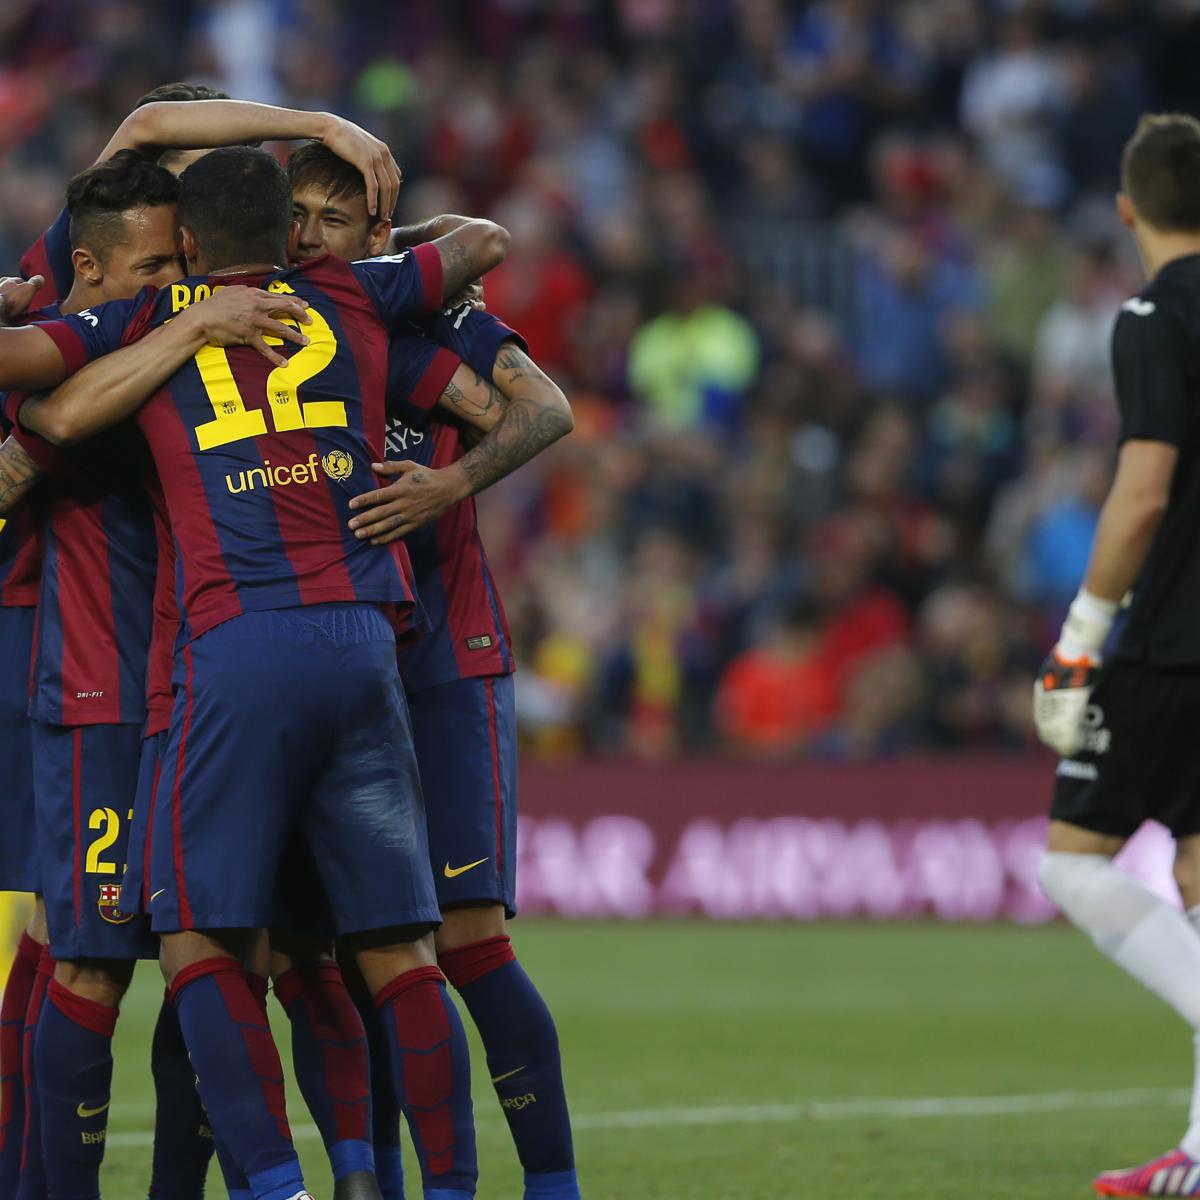 Half-time in LaLiga advantage Barça - by Ben Hayward